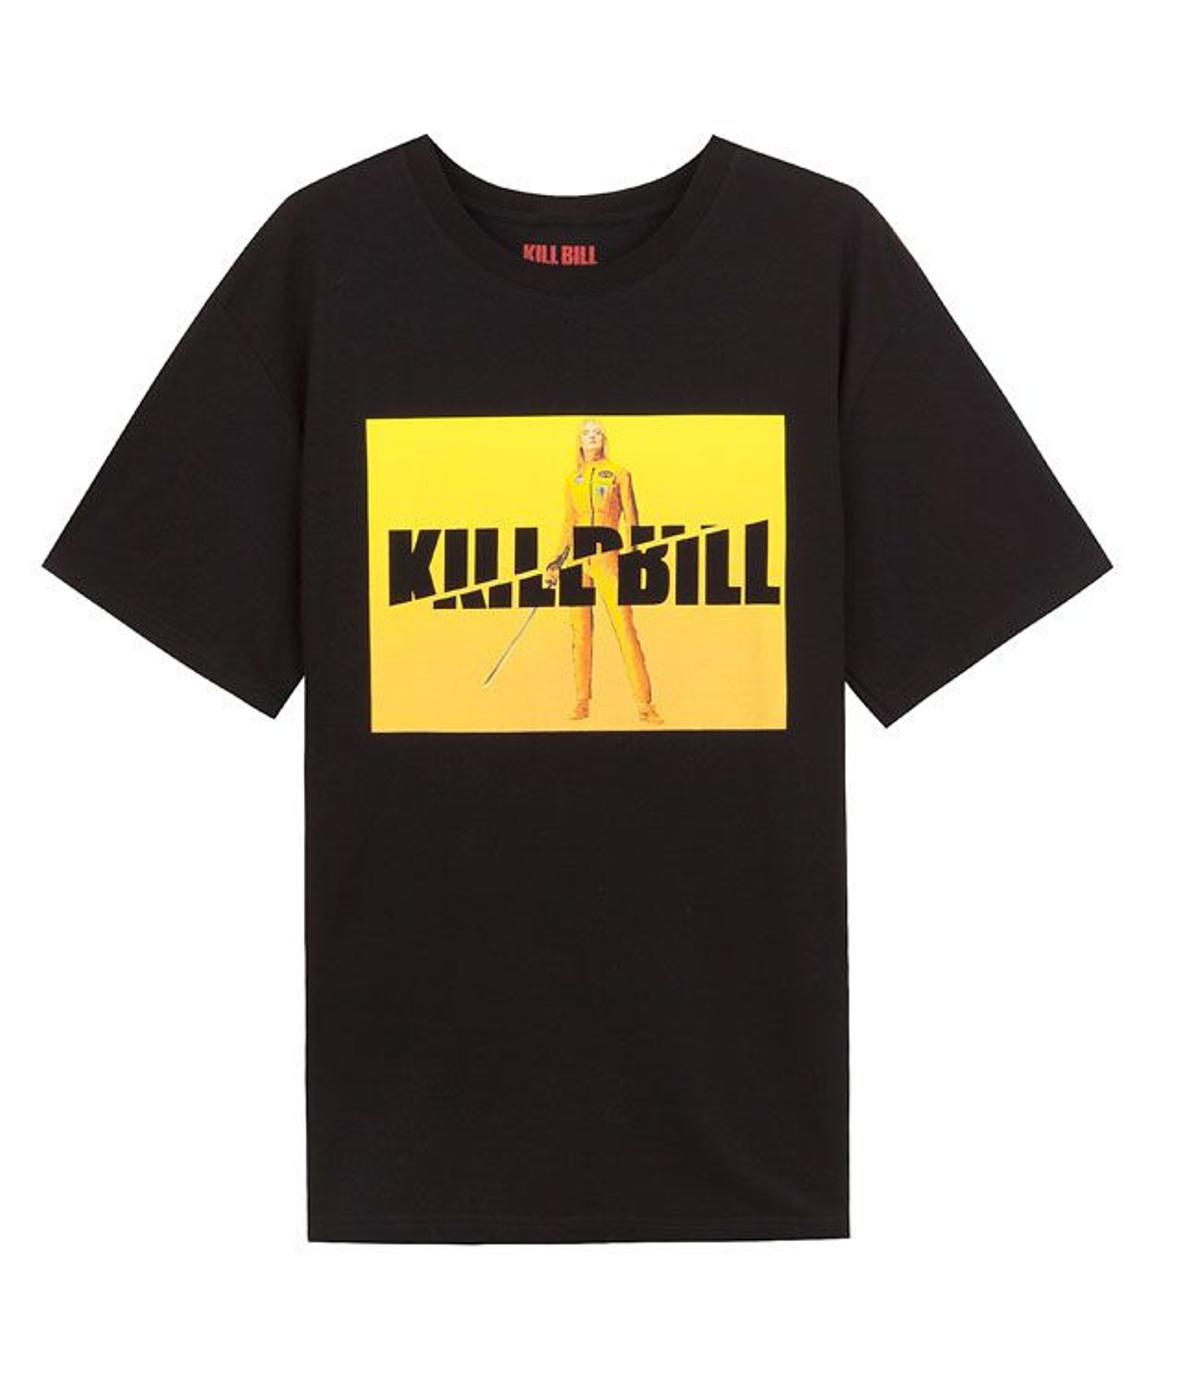 Camiseta de Bershka con imagen de Kill Bill